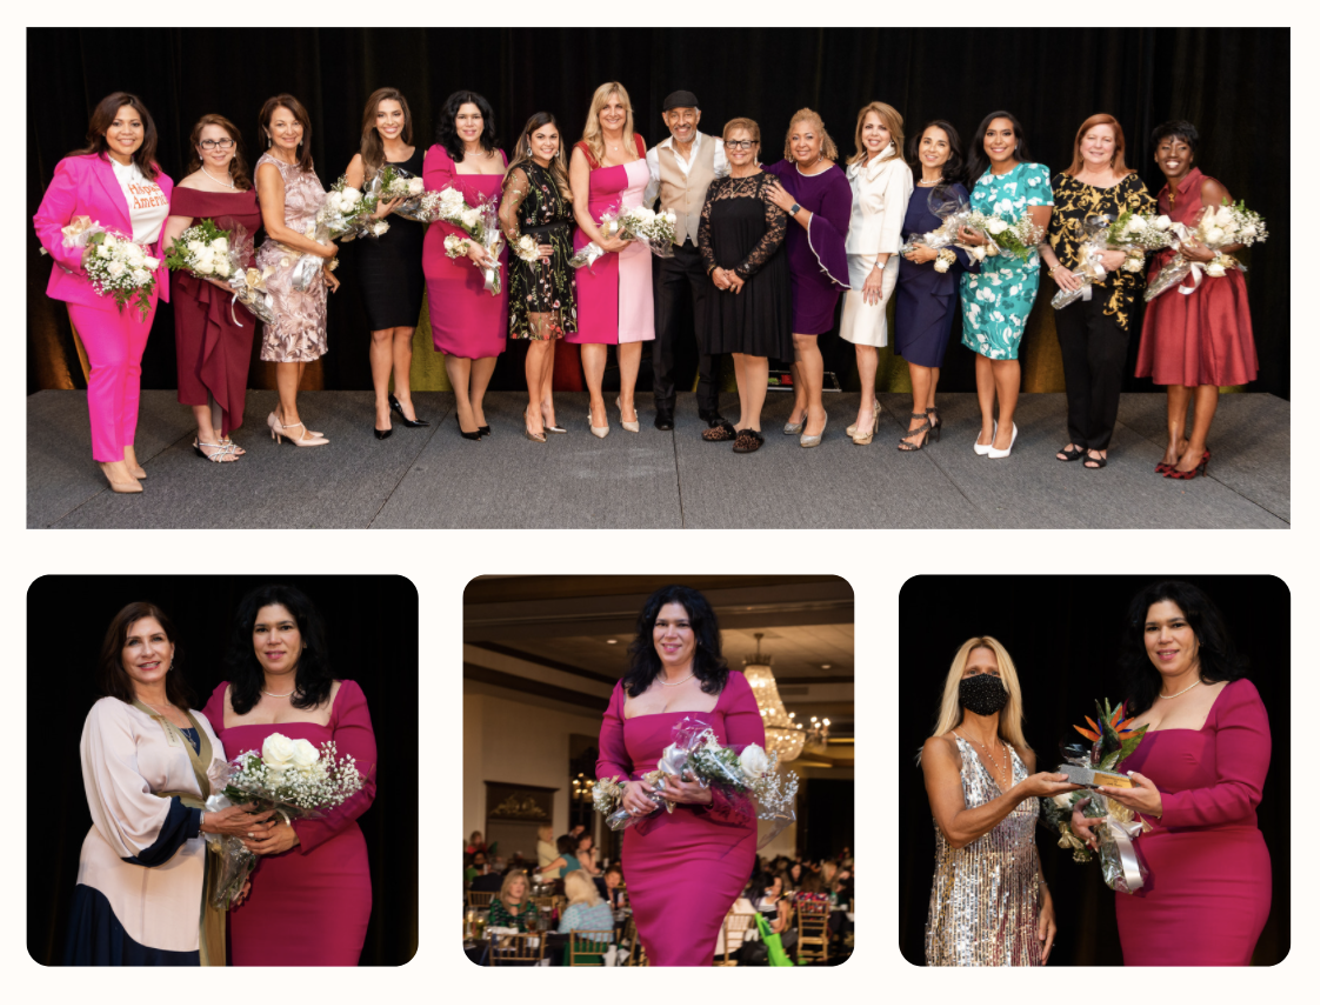 South Florida Hispanic Women of Distinction Awards Ceremony honored Lubby Navarro